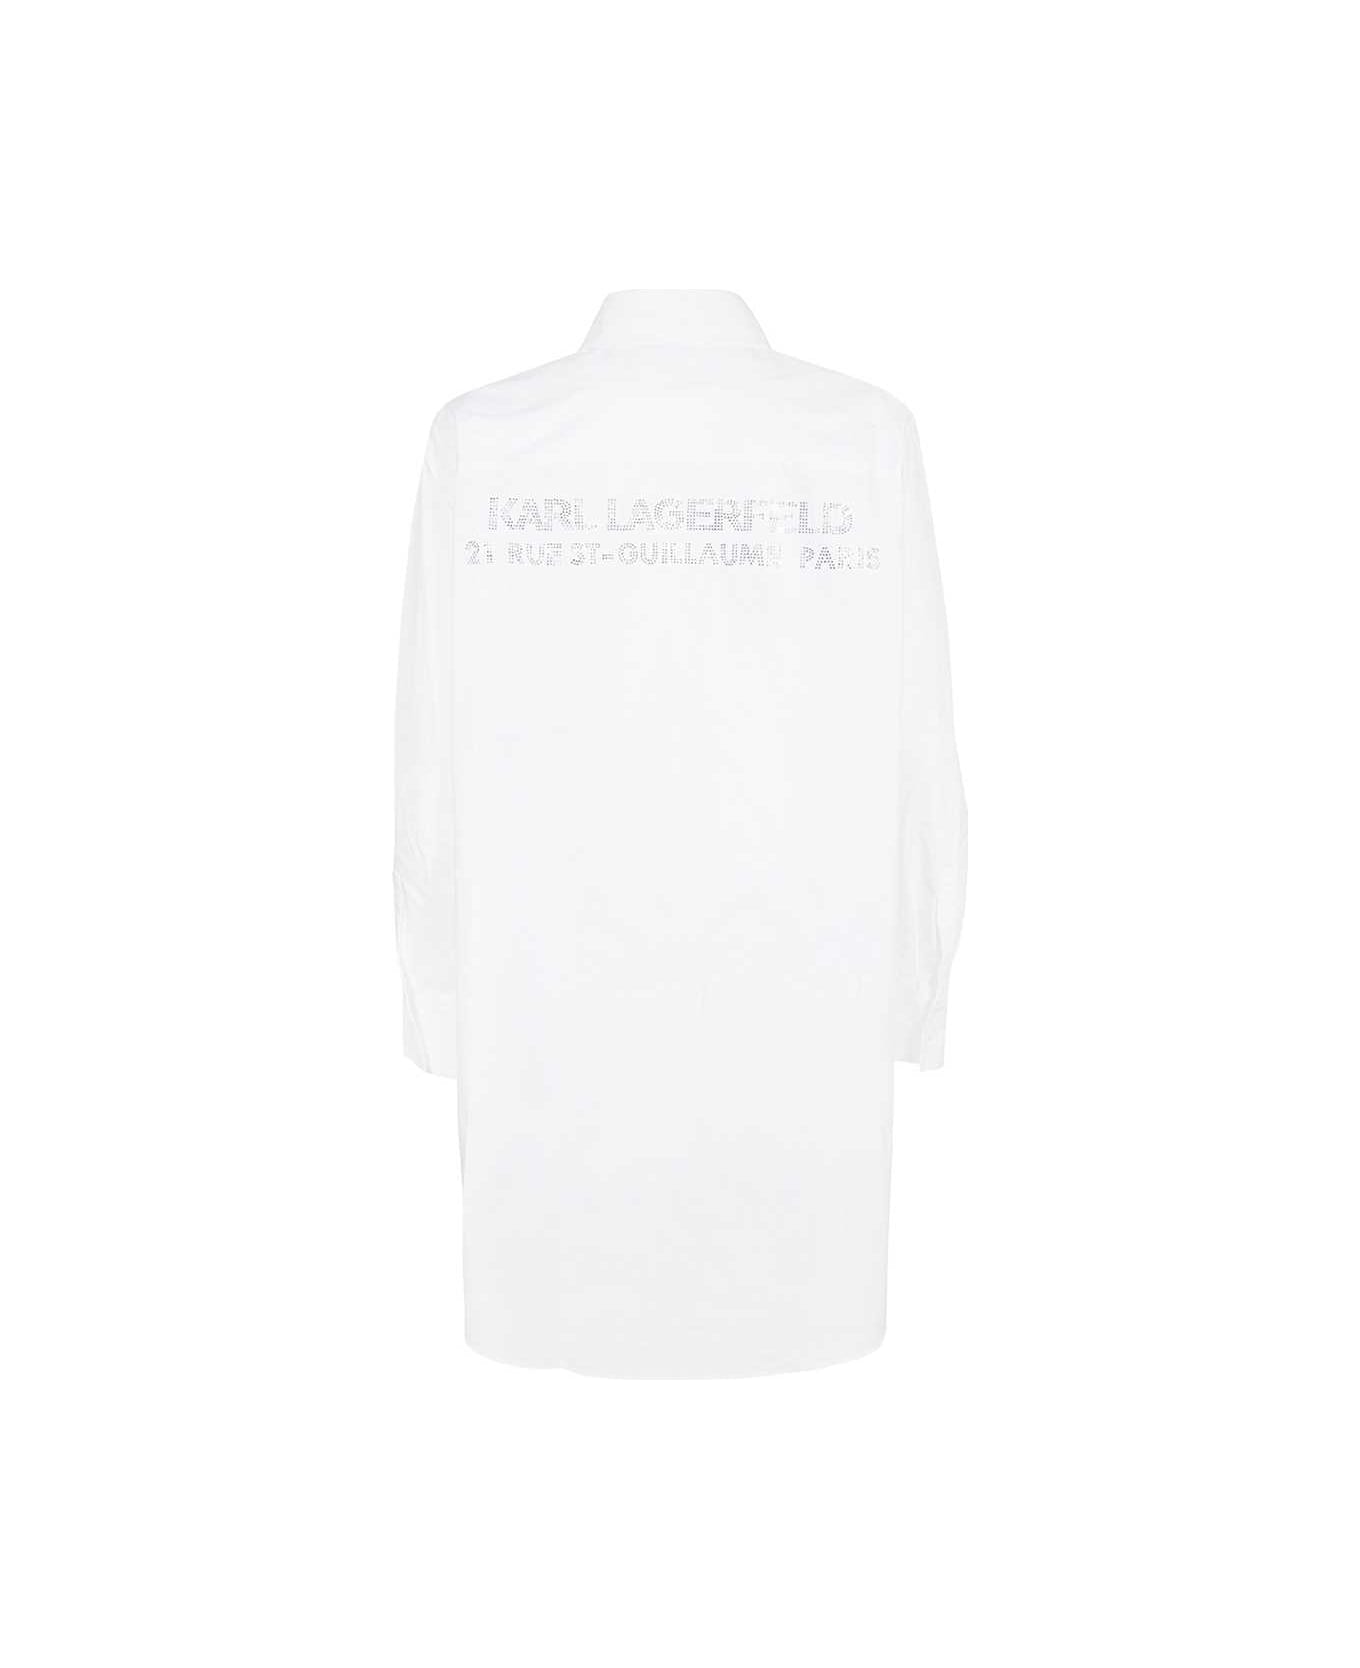 Karl Lagerfeld Long Cotton Shirt - White